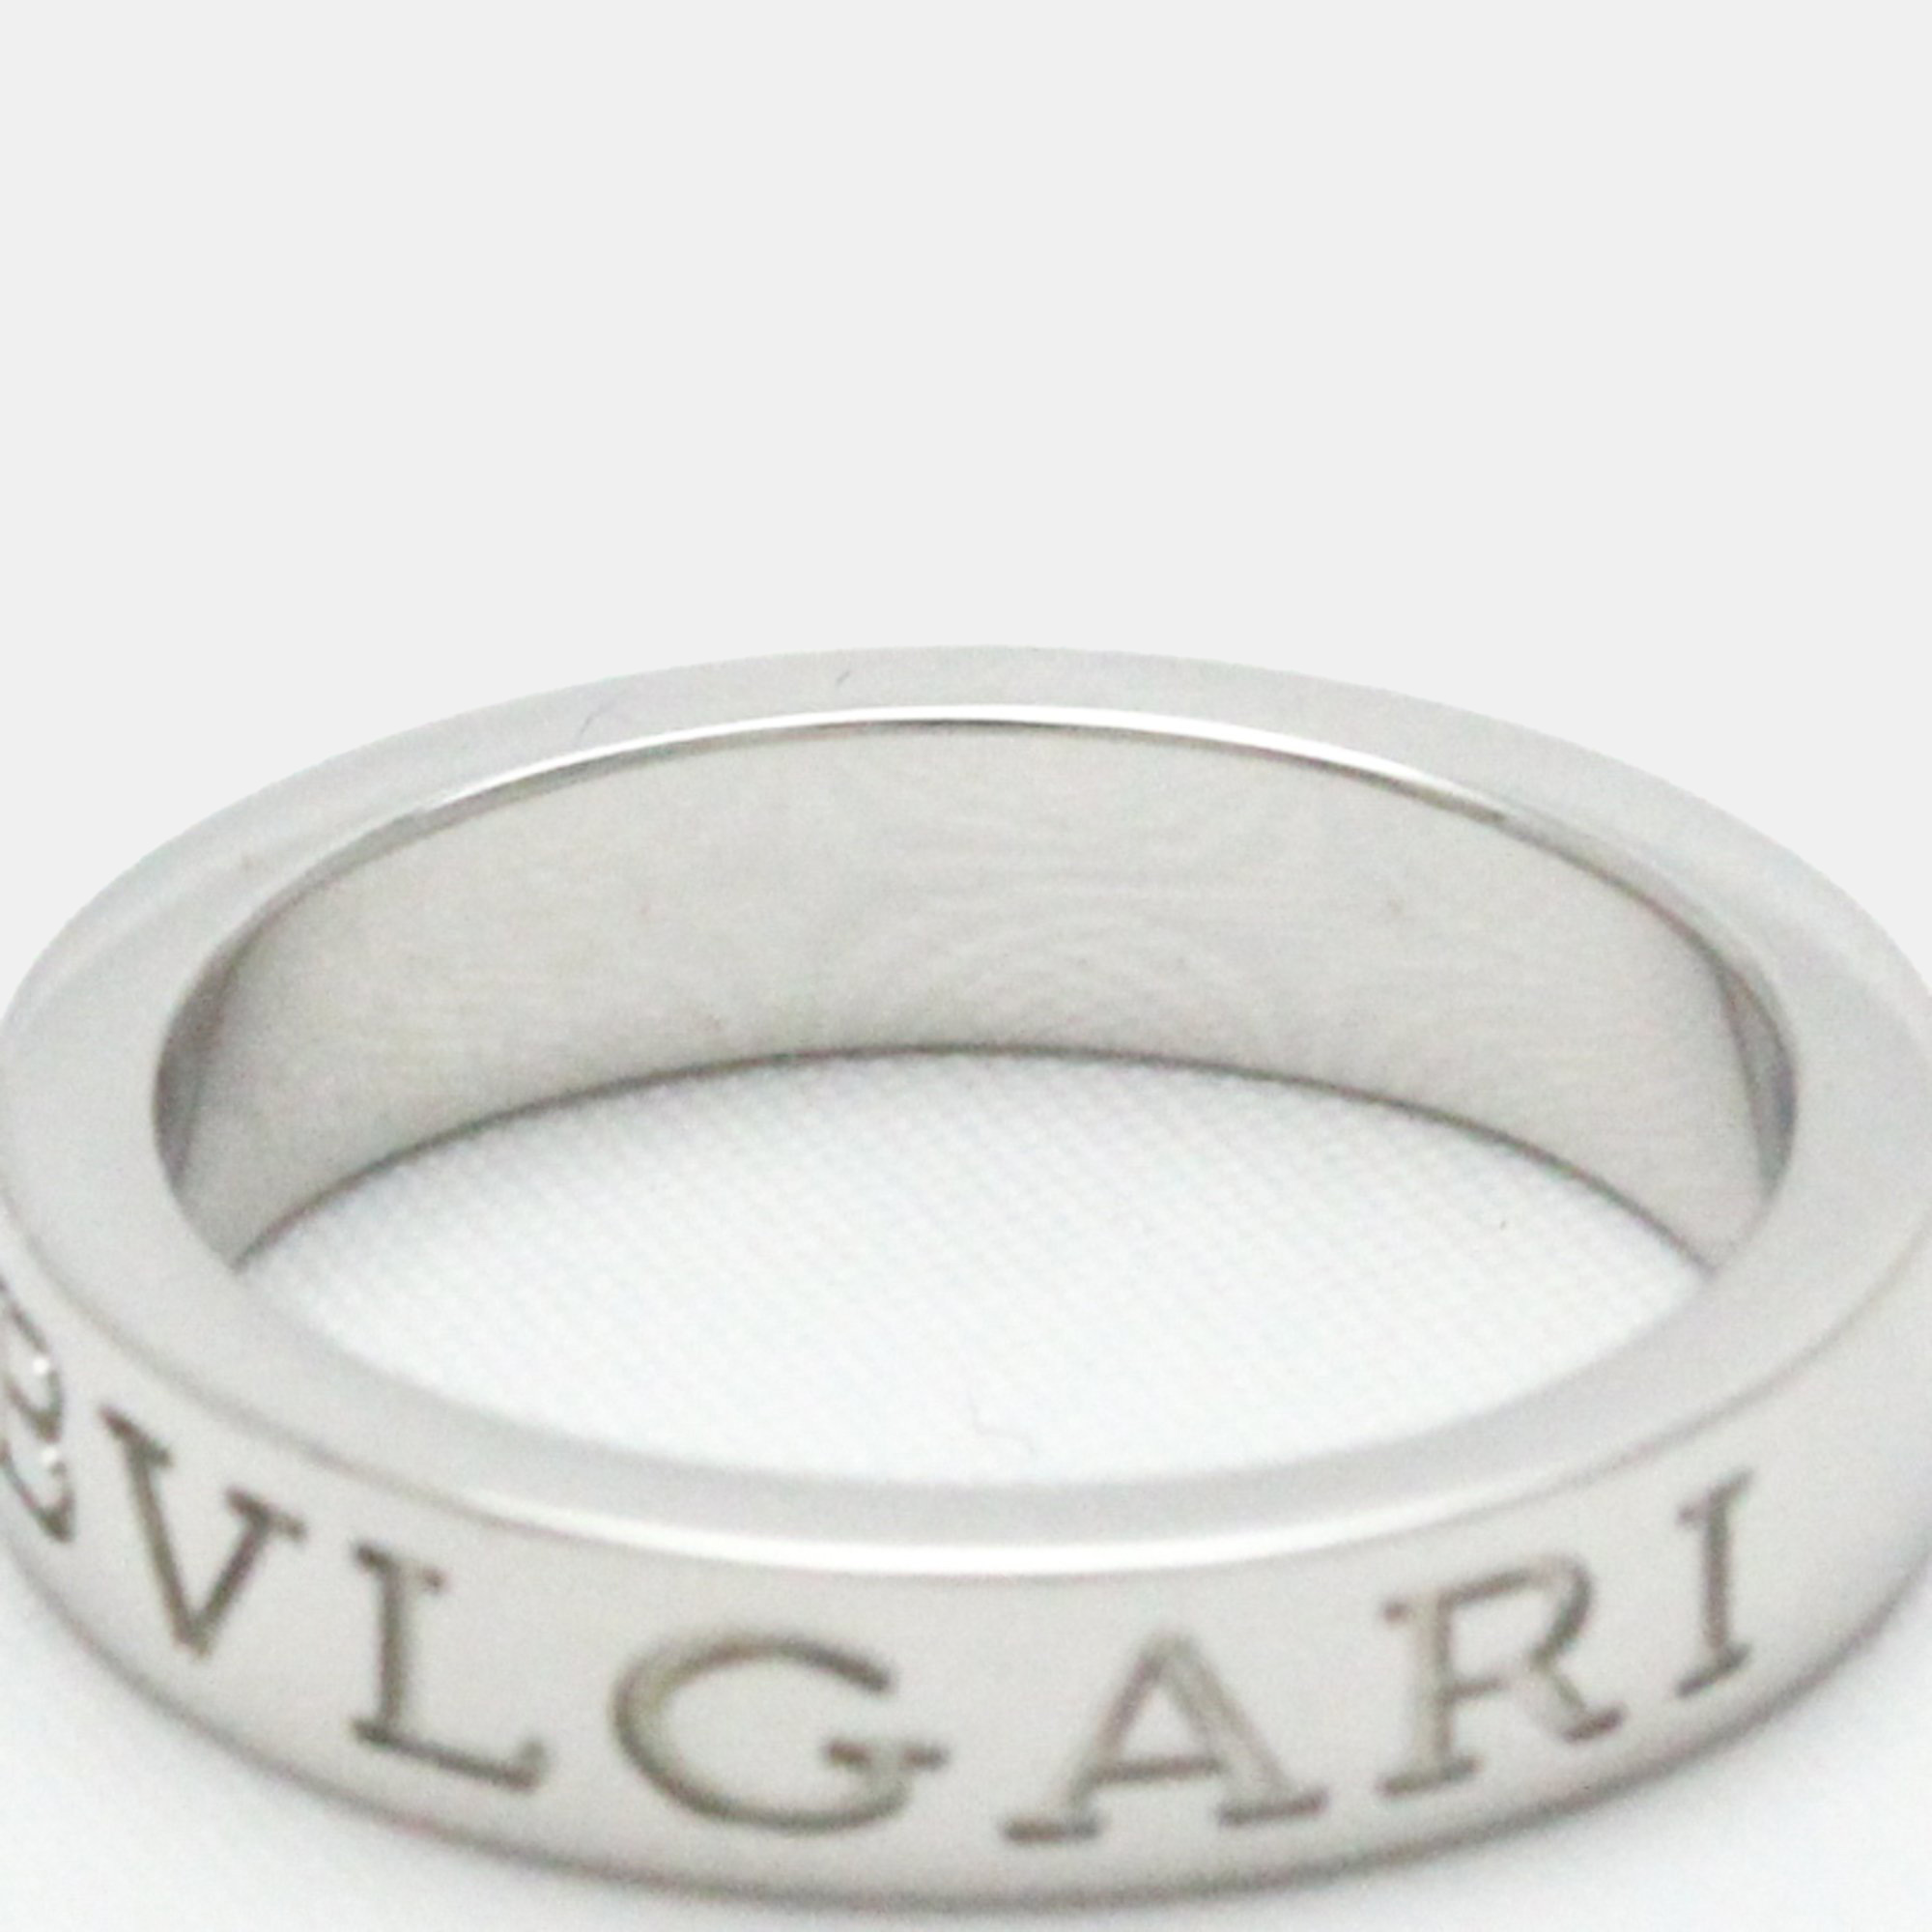 Bvlgari 18K White Gold Diamond Ring EU 53